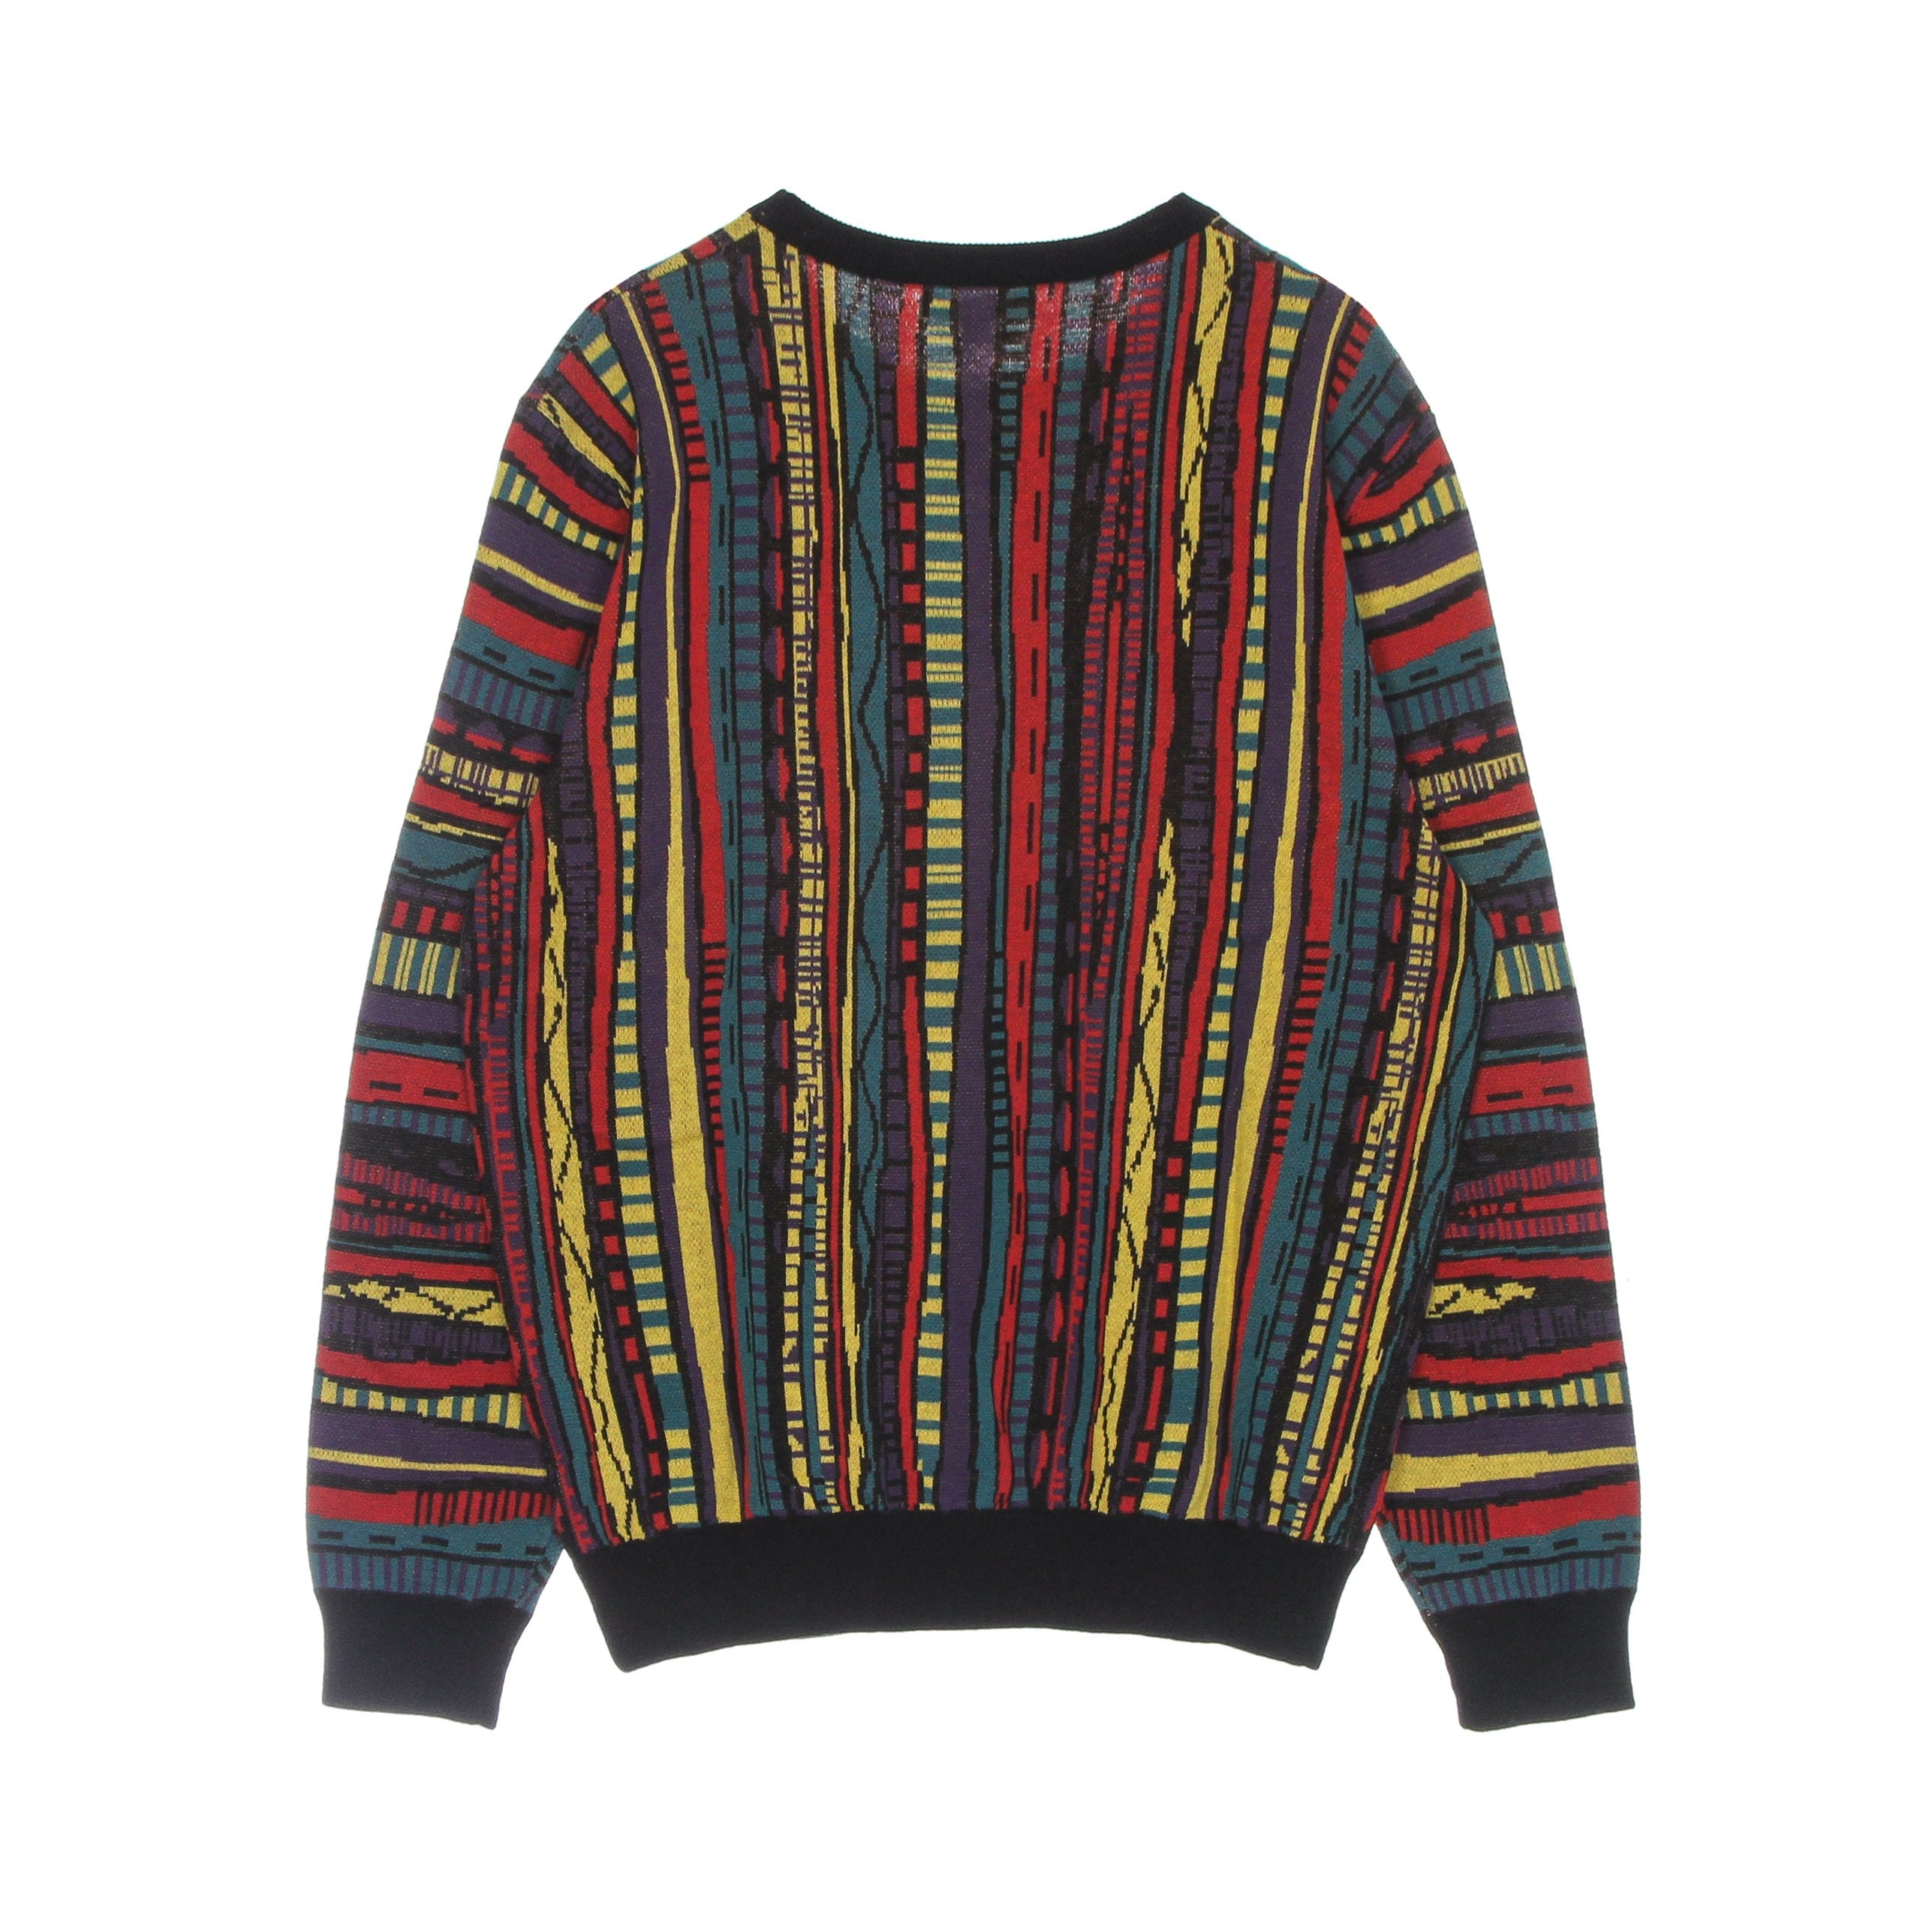 Theodore Summer Knit Men's Sweater